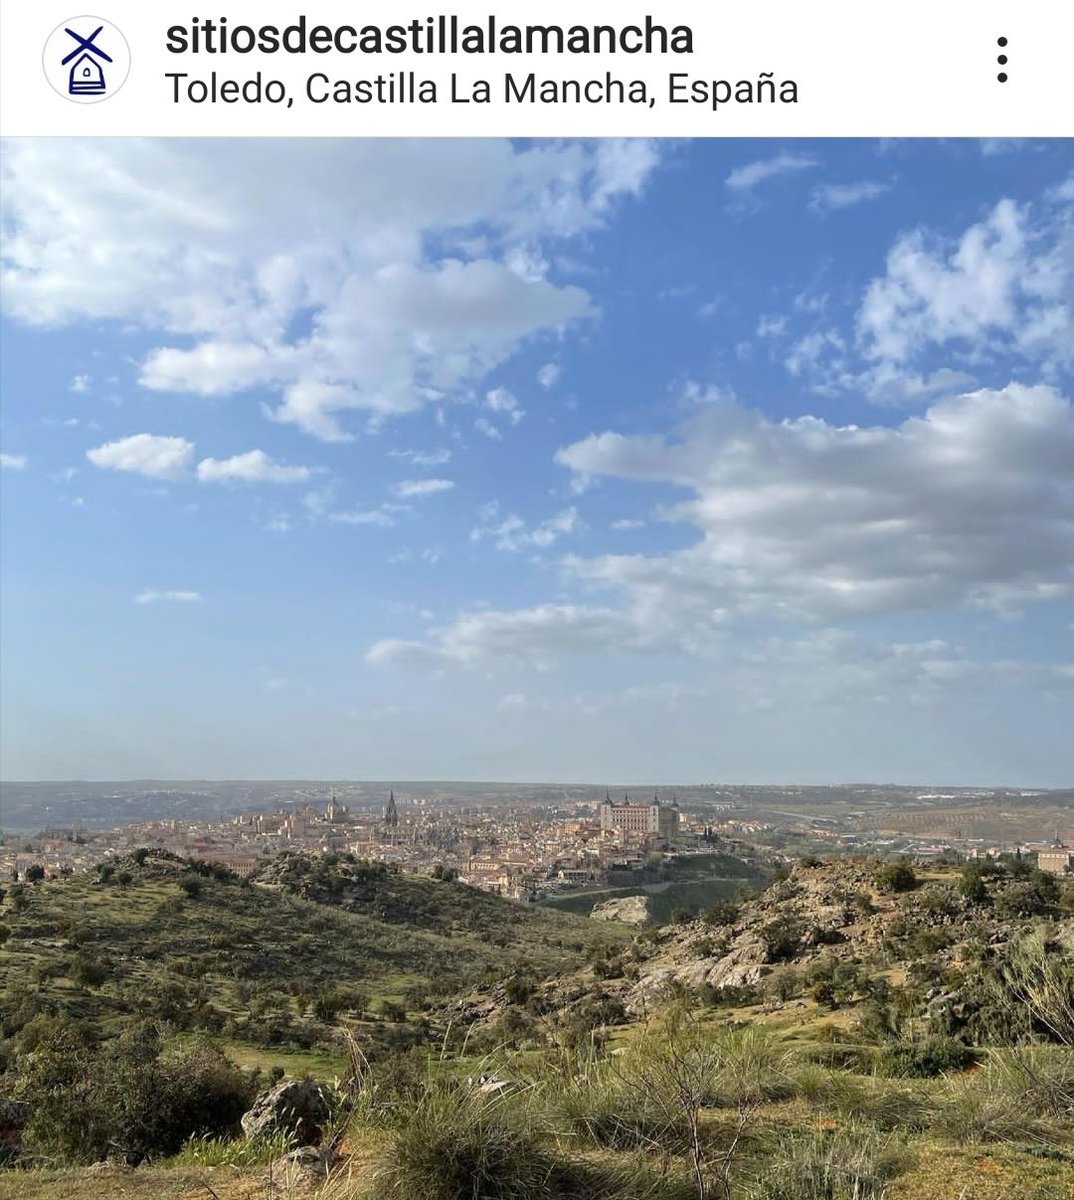 Vistas que enamoran. #Toledo
📸 sitiosdecastillalamancha
instagram.com/p/CNRsORKh0V5/…